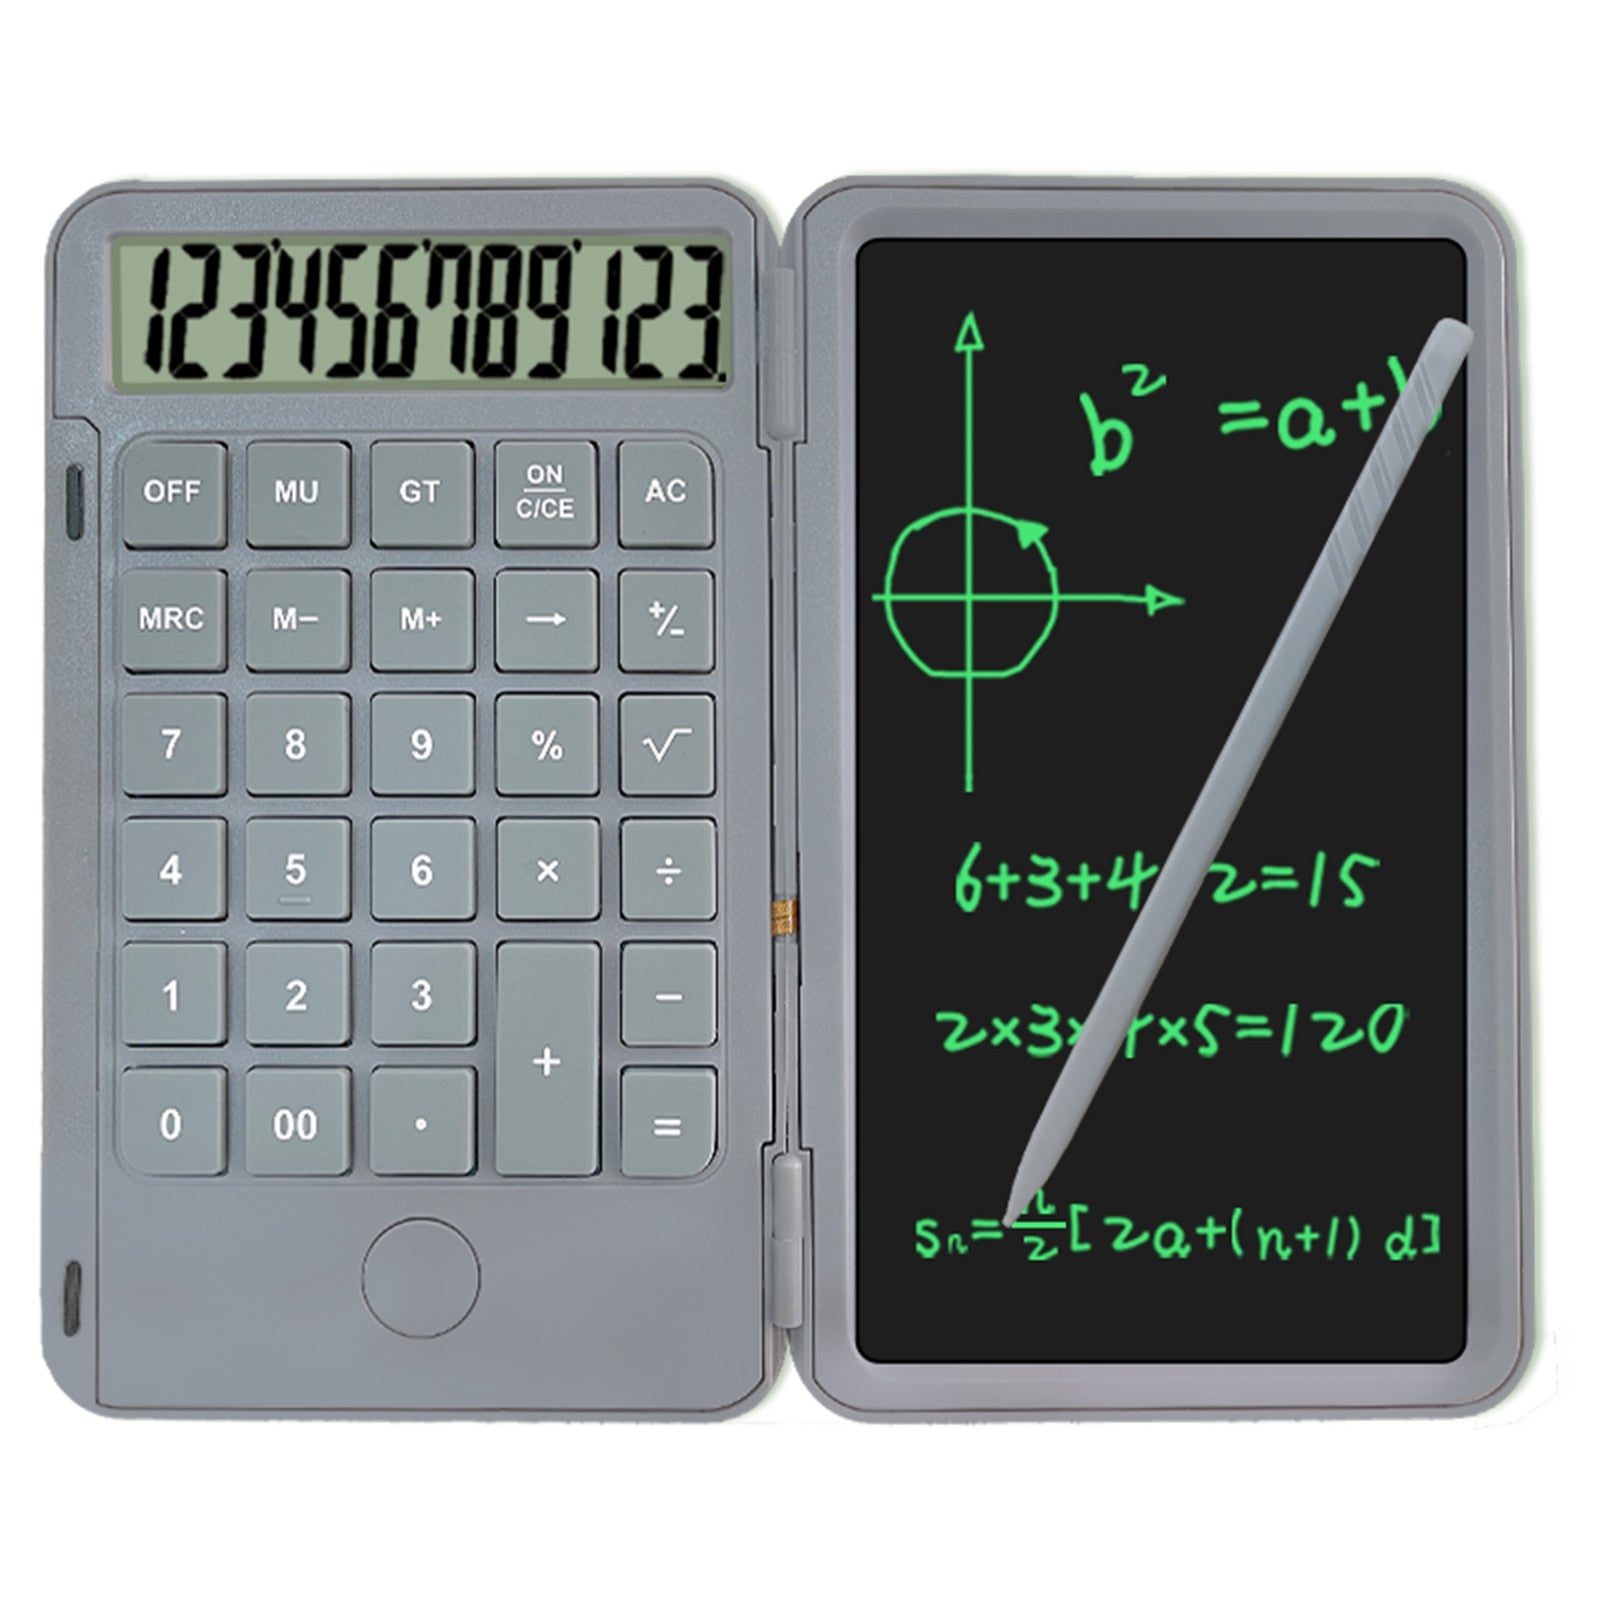 6.5Inch Large Display Calculator